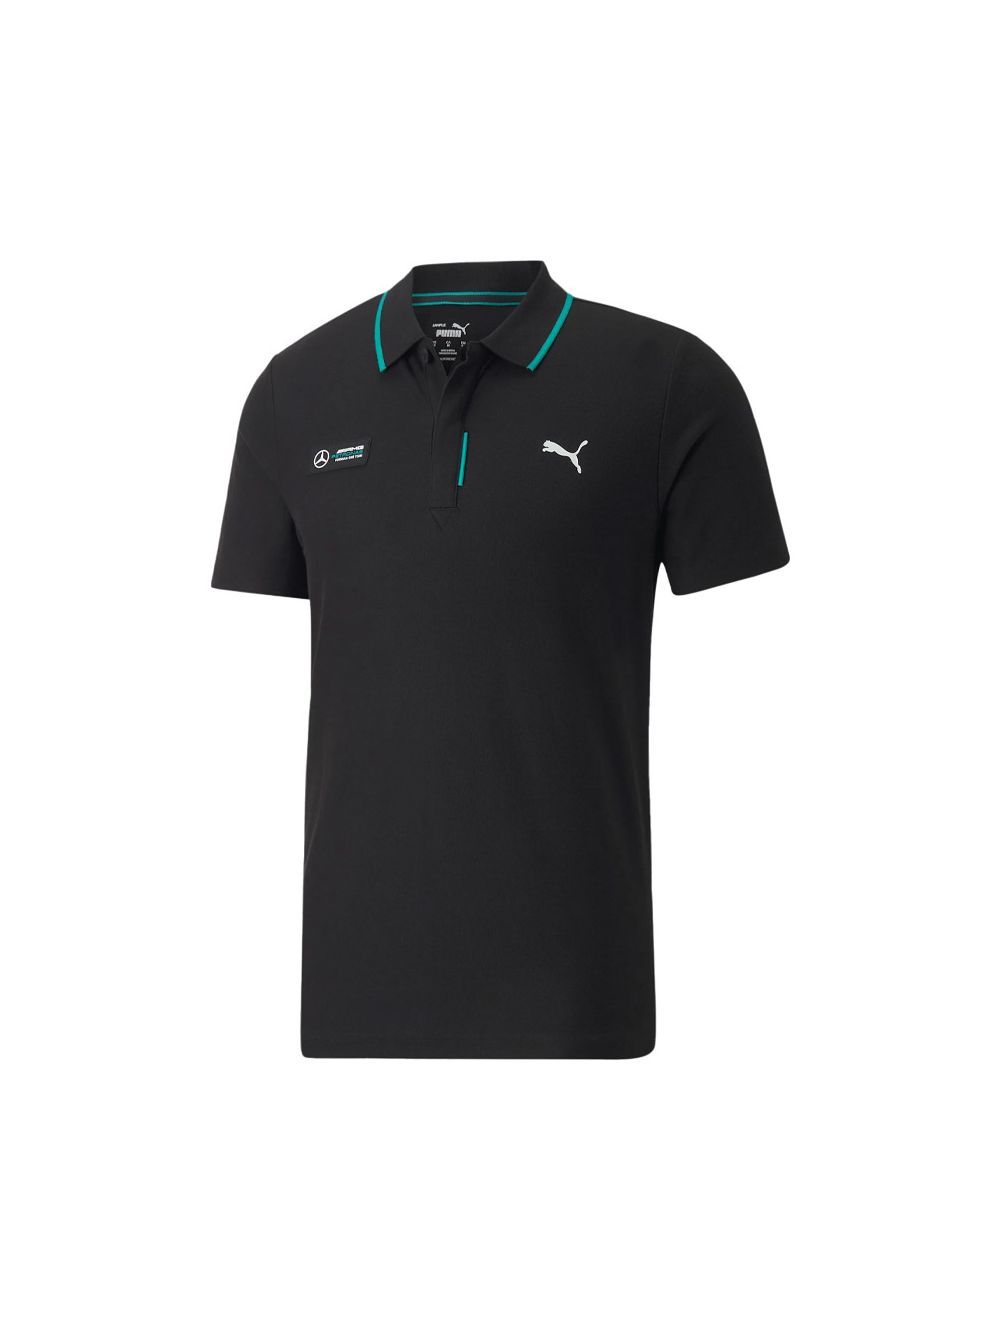 Shop Puma Mercedes AMG Petronas Motorsport F1 Mens Golfer Black